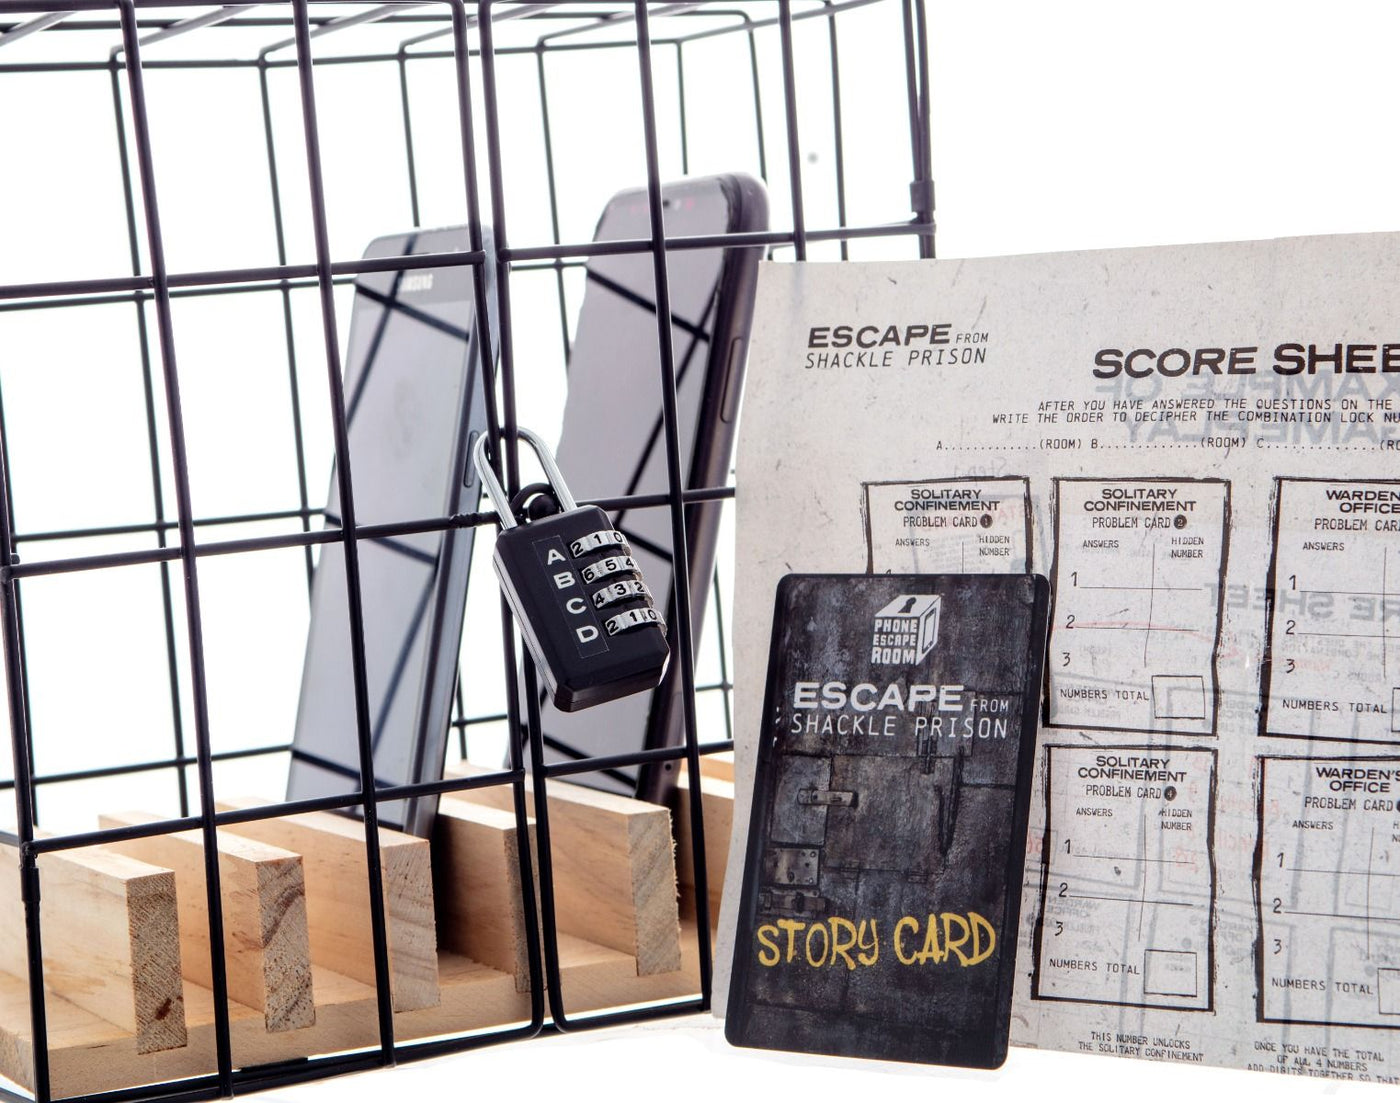 Phone Escape Room Escape Shackle Prison - Game - TwoBeeps.co.uk